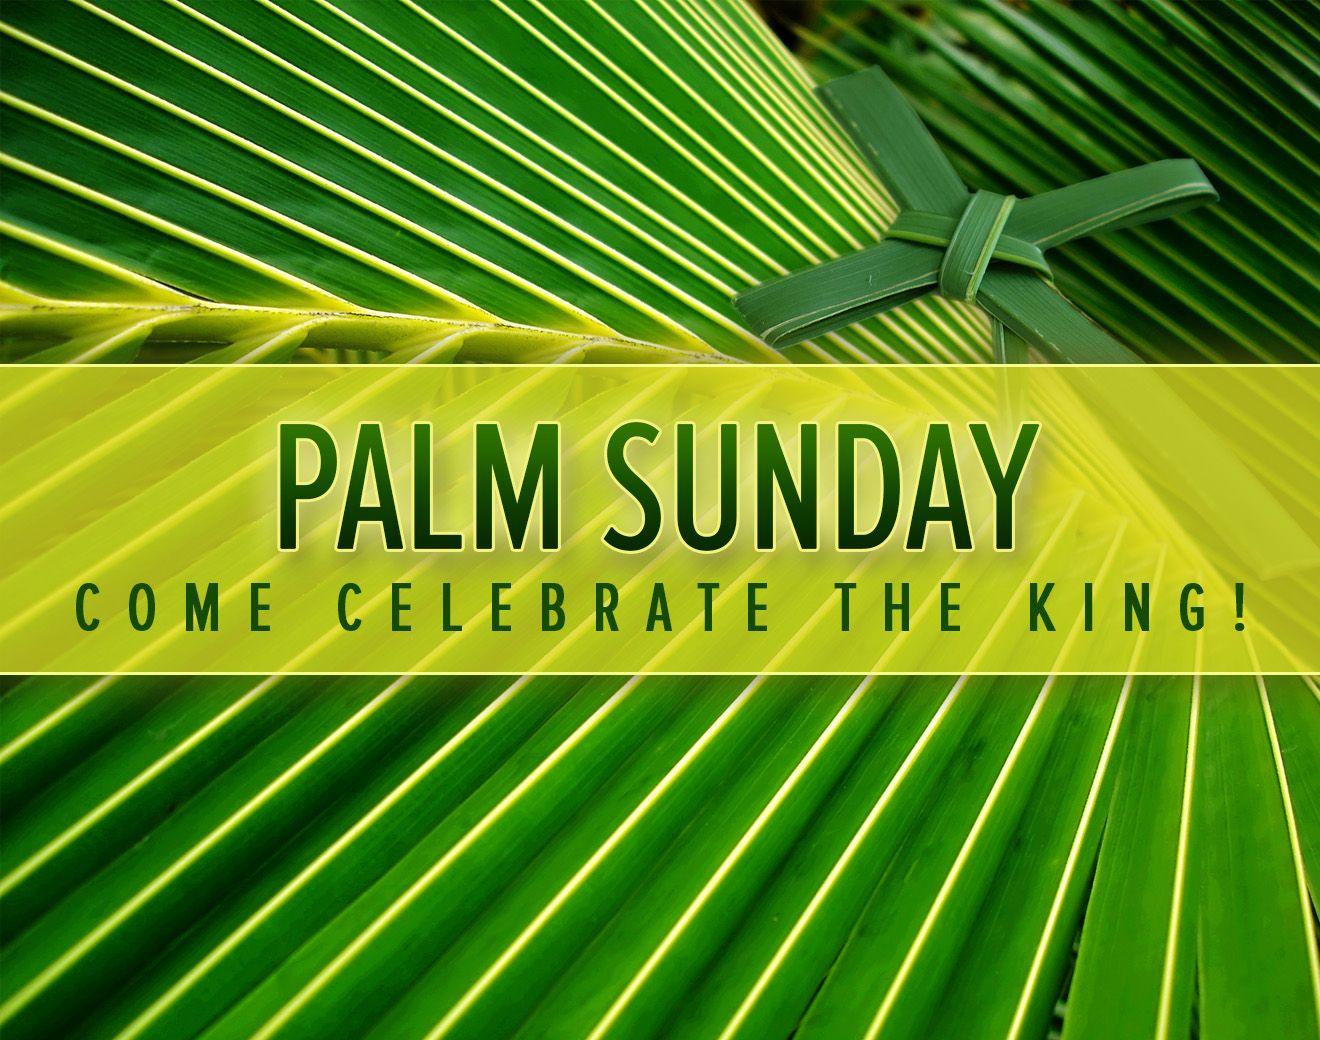 Palm Sunday Image & Palm Sunday Quotes, Wishes, WhatsApp Status